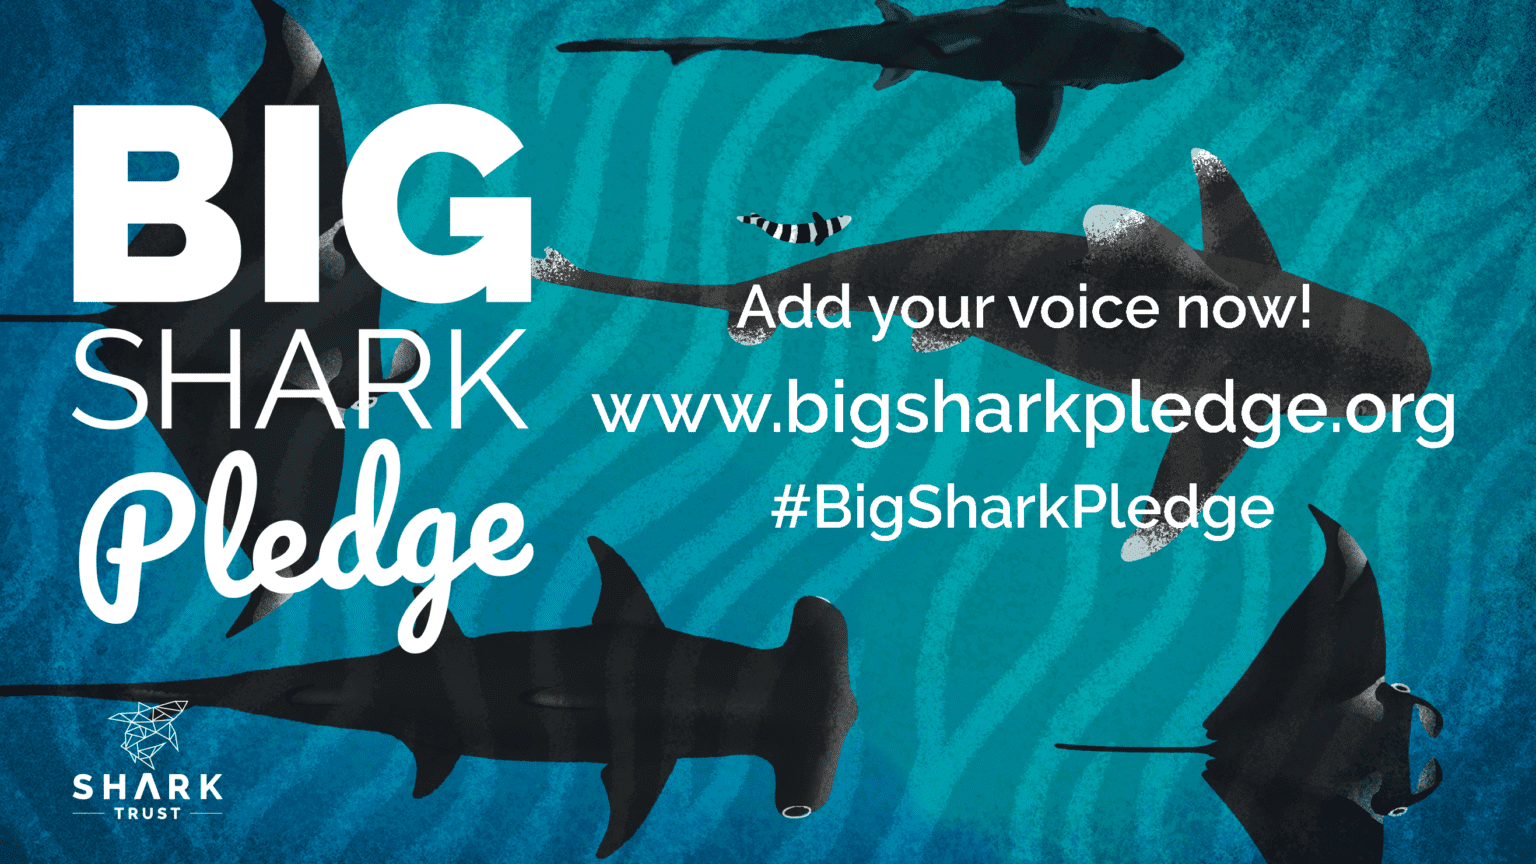 Big Shark Pledge